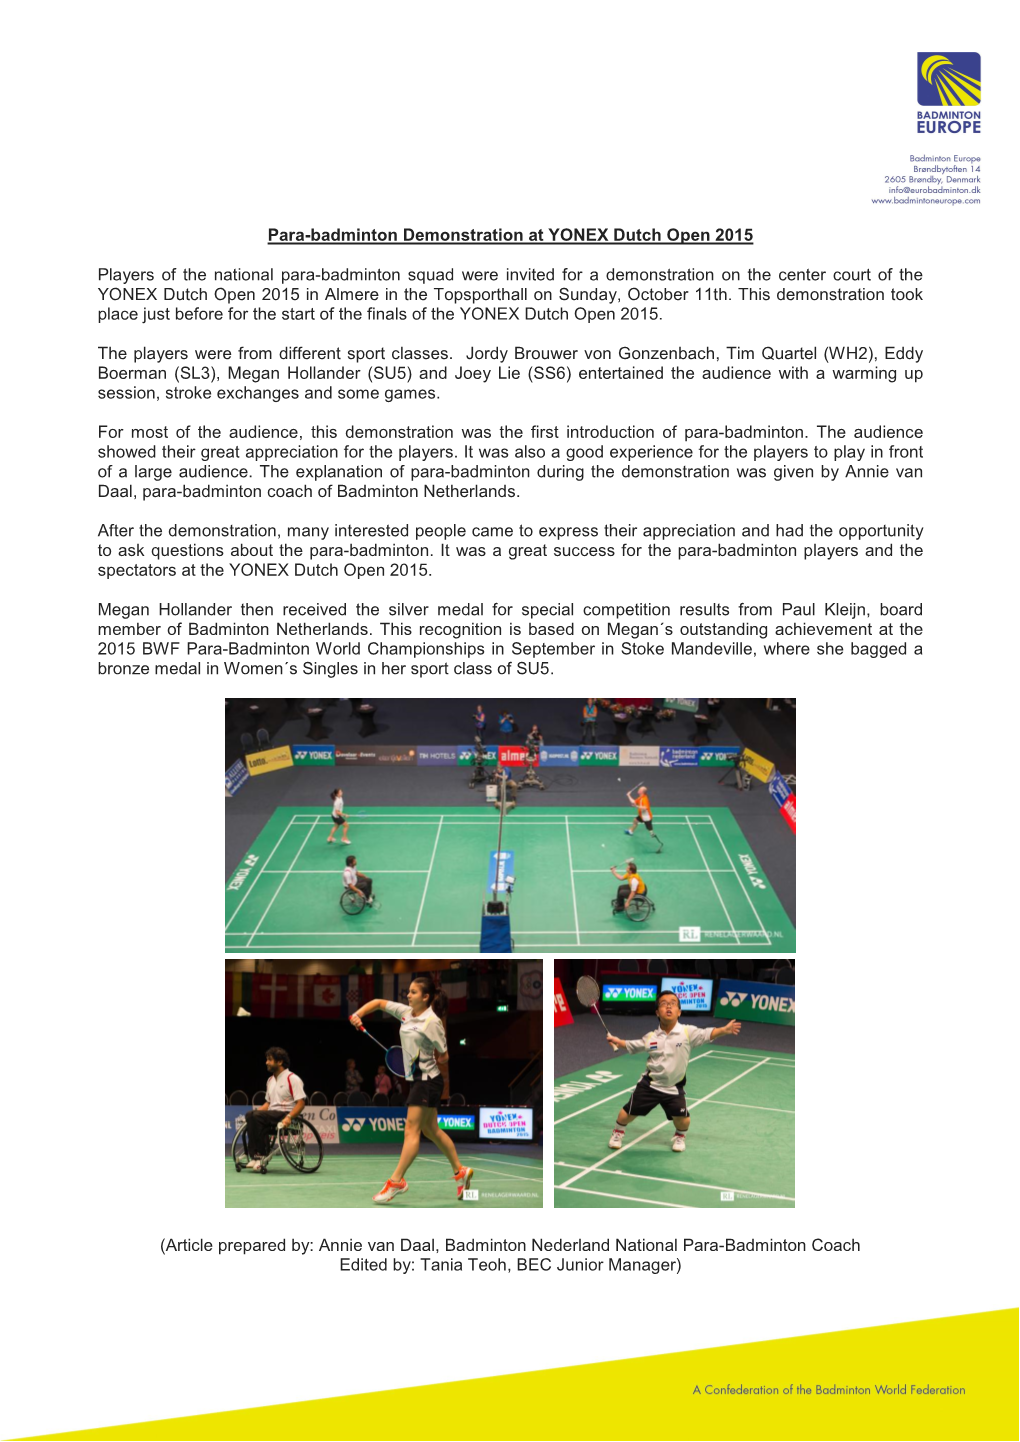 Badminton Nederland National Para-Badminton Coach Edited By: Tania Teoh, BEC Junior Manager)